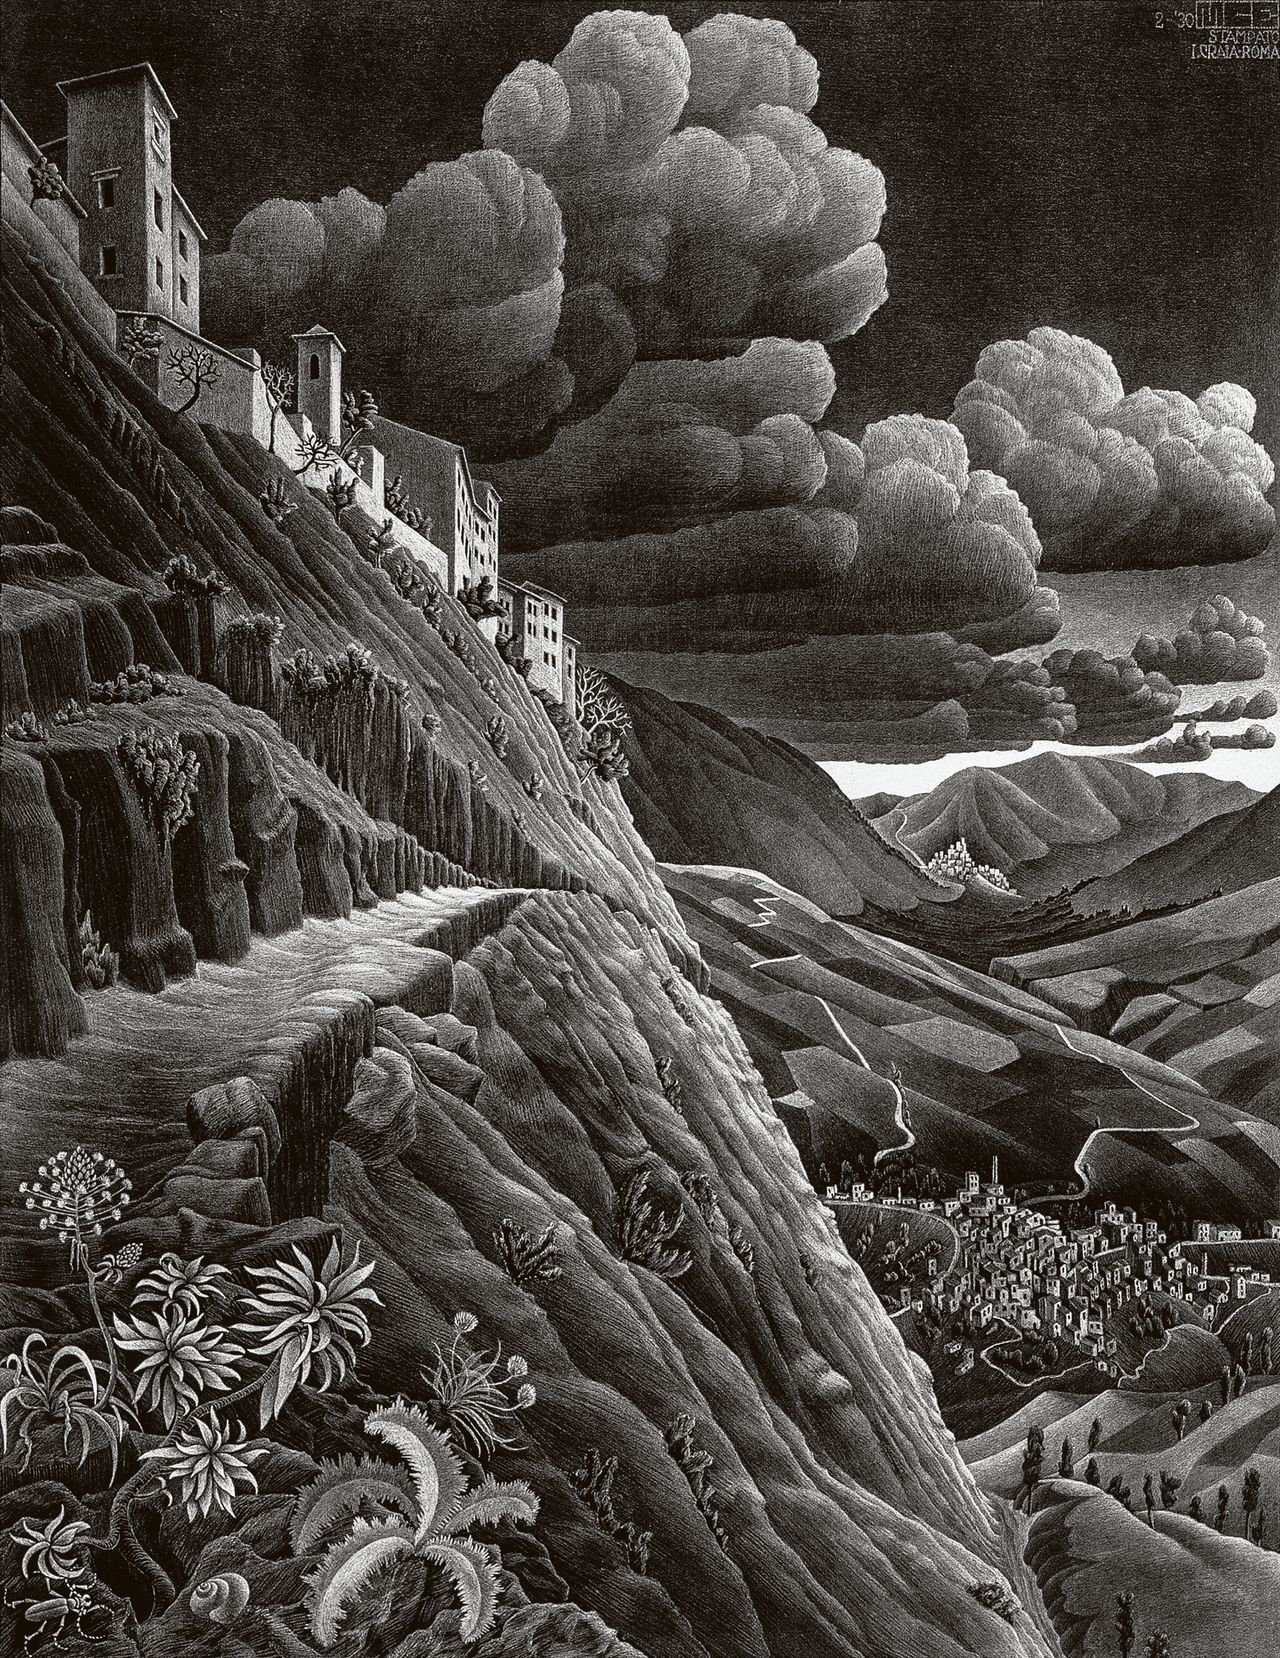 Castrovalva (1930), M.C.Escher